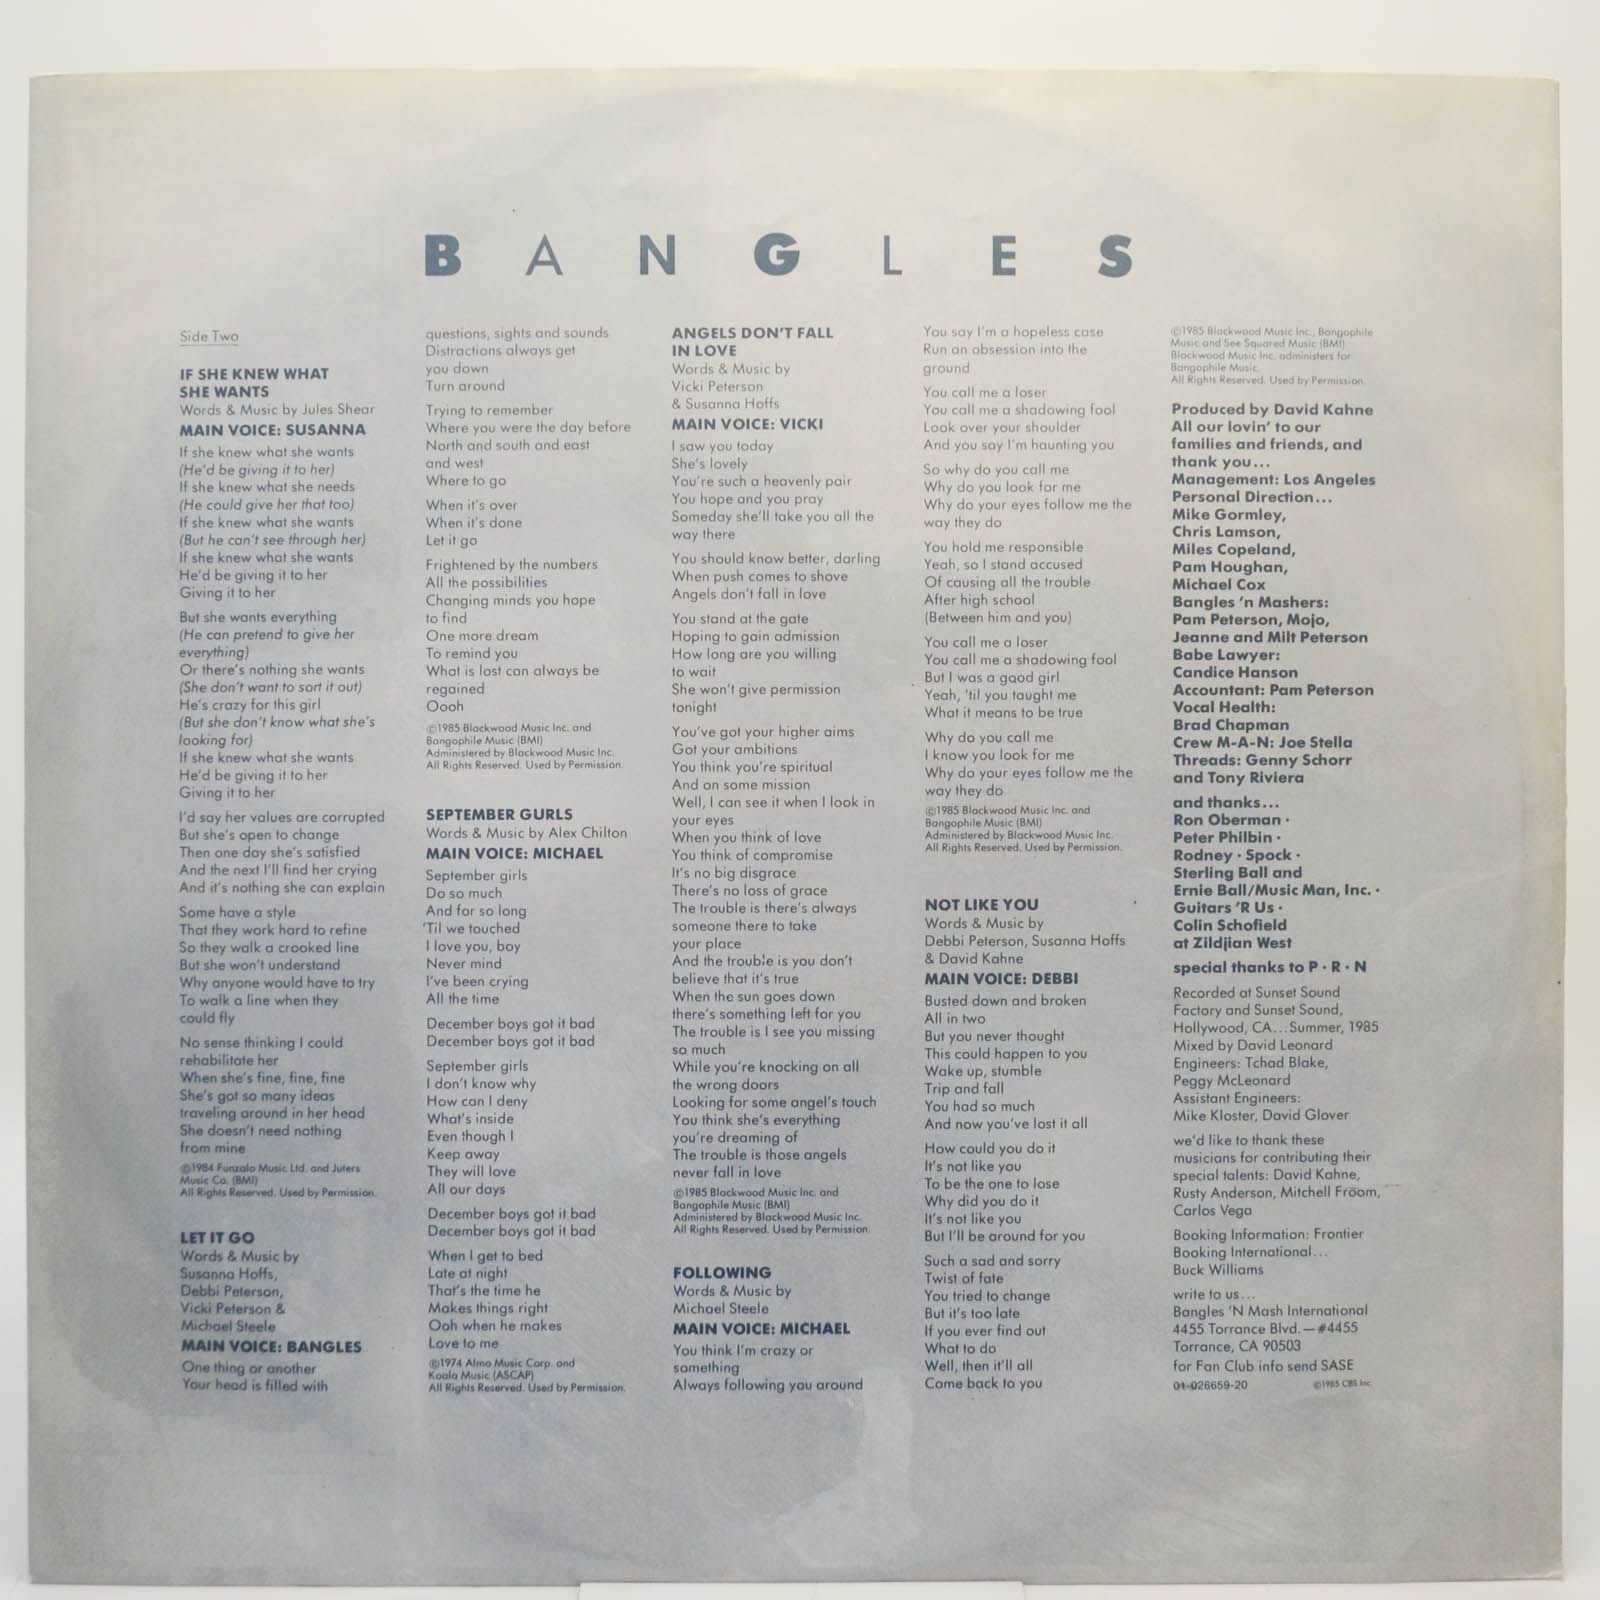 Bangles — Different Light, 1986